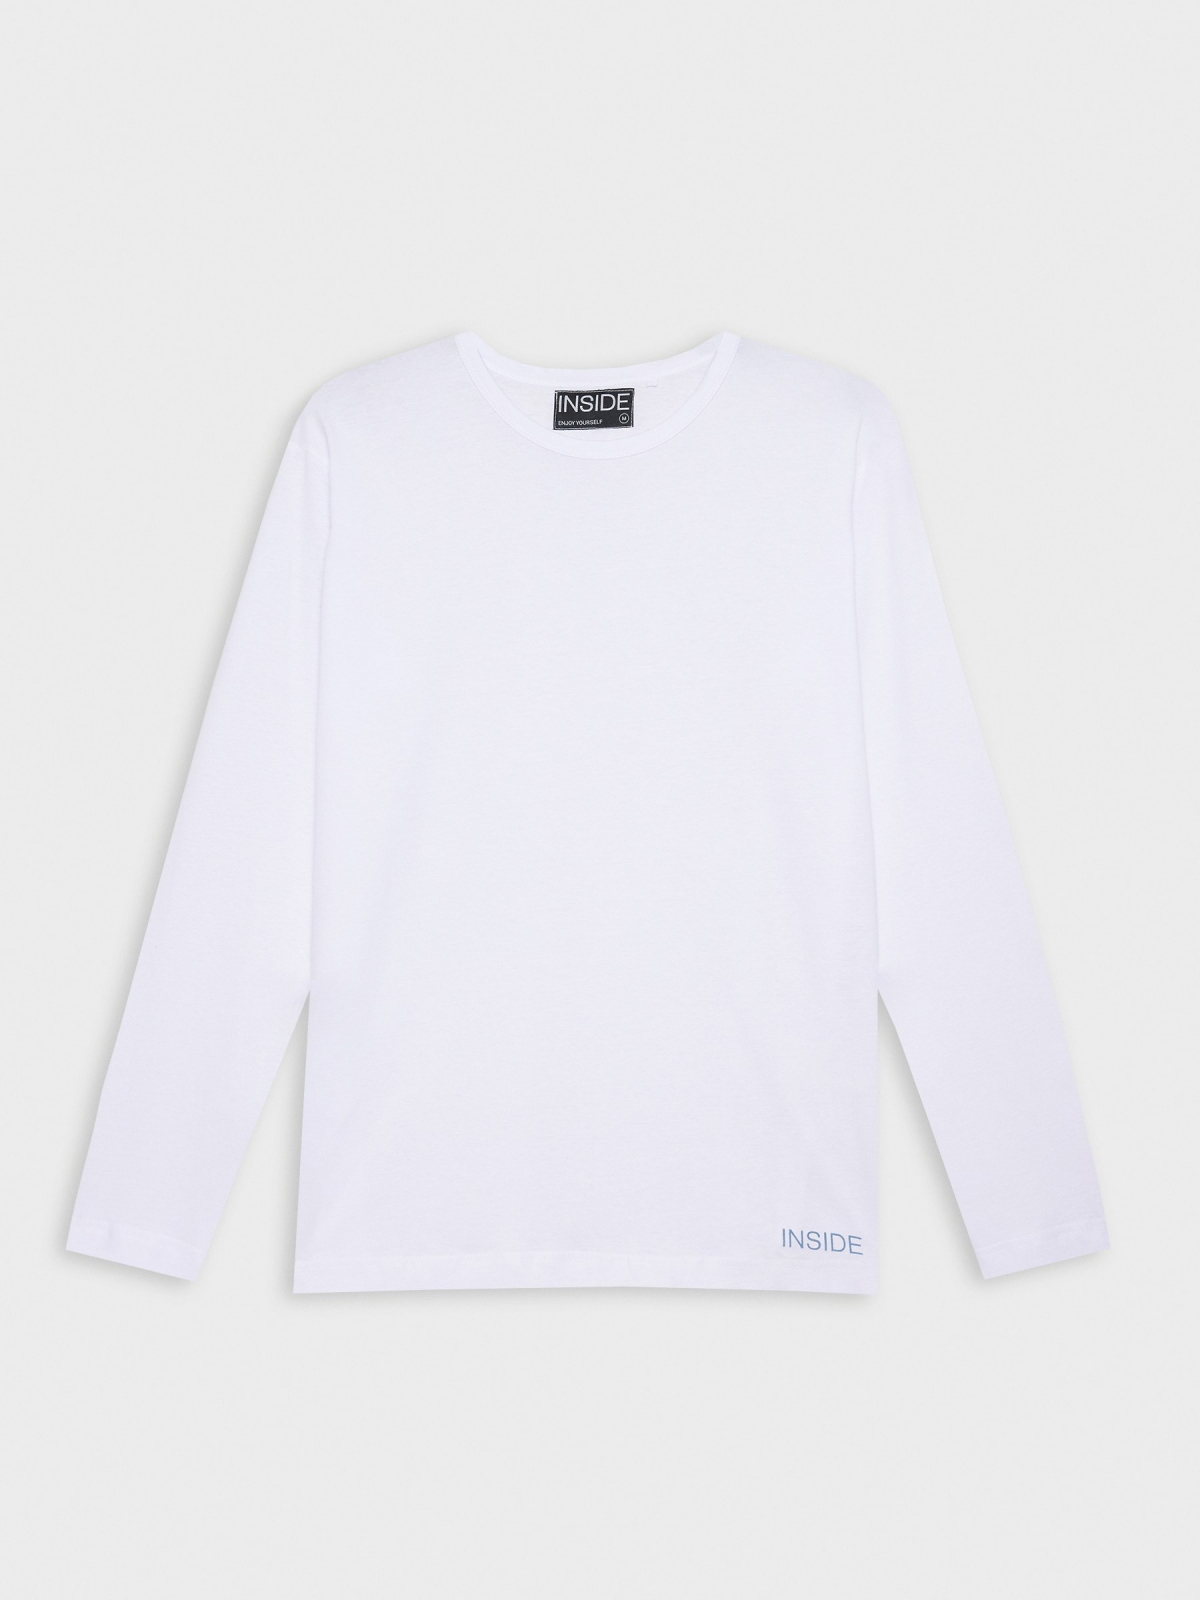  T-shirt básica de manga comprida branco